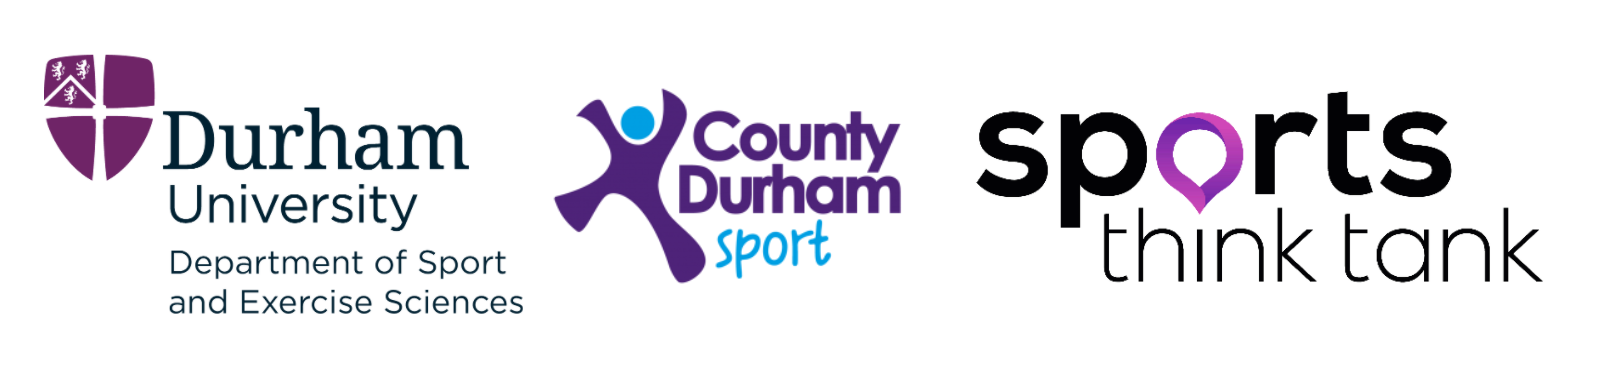 County Durham Sport DU logos